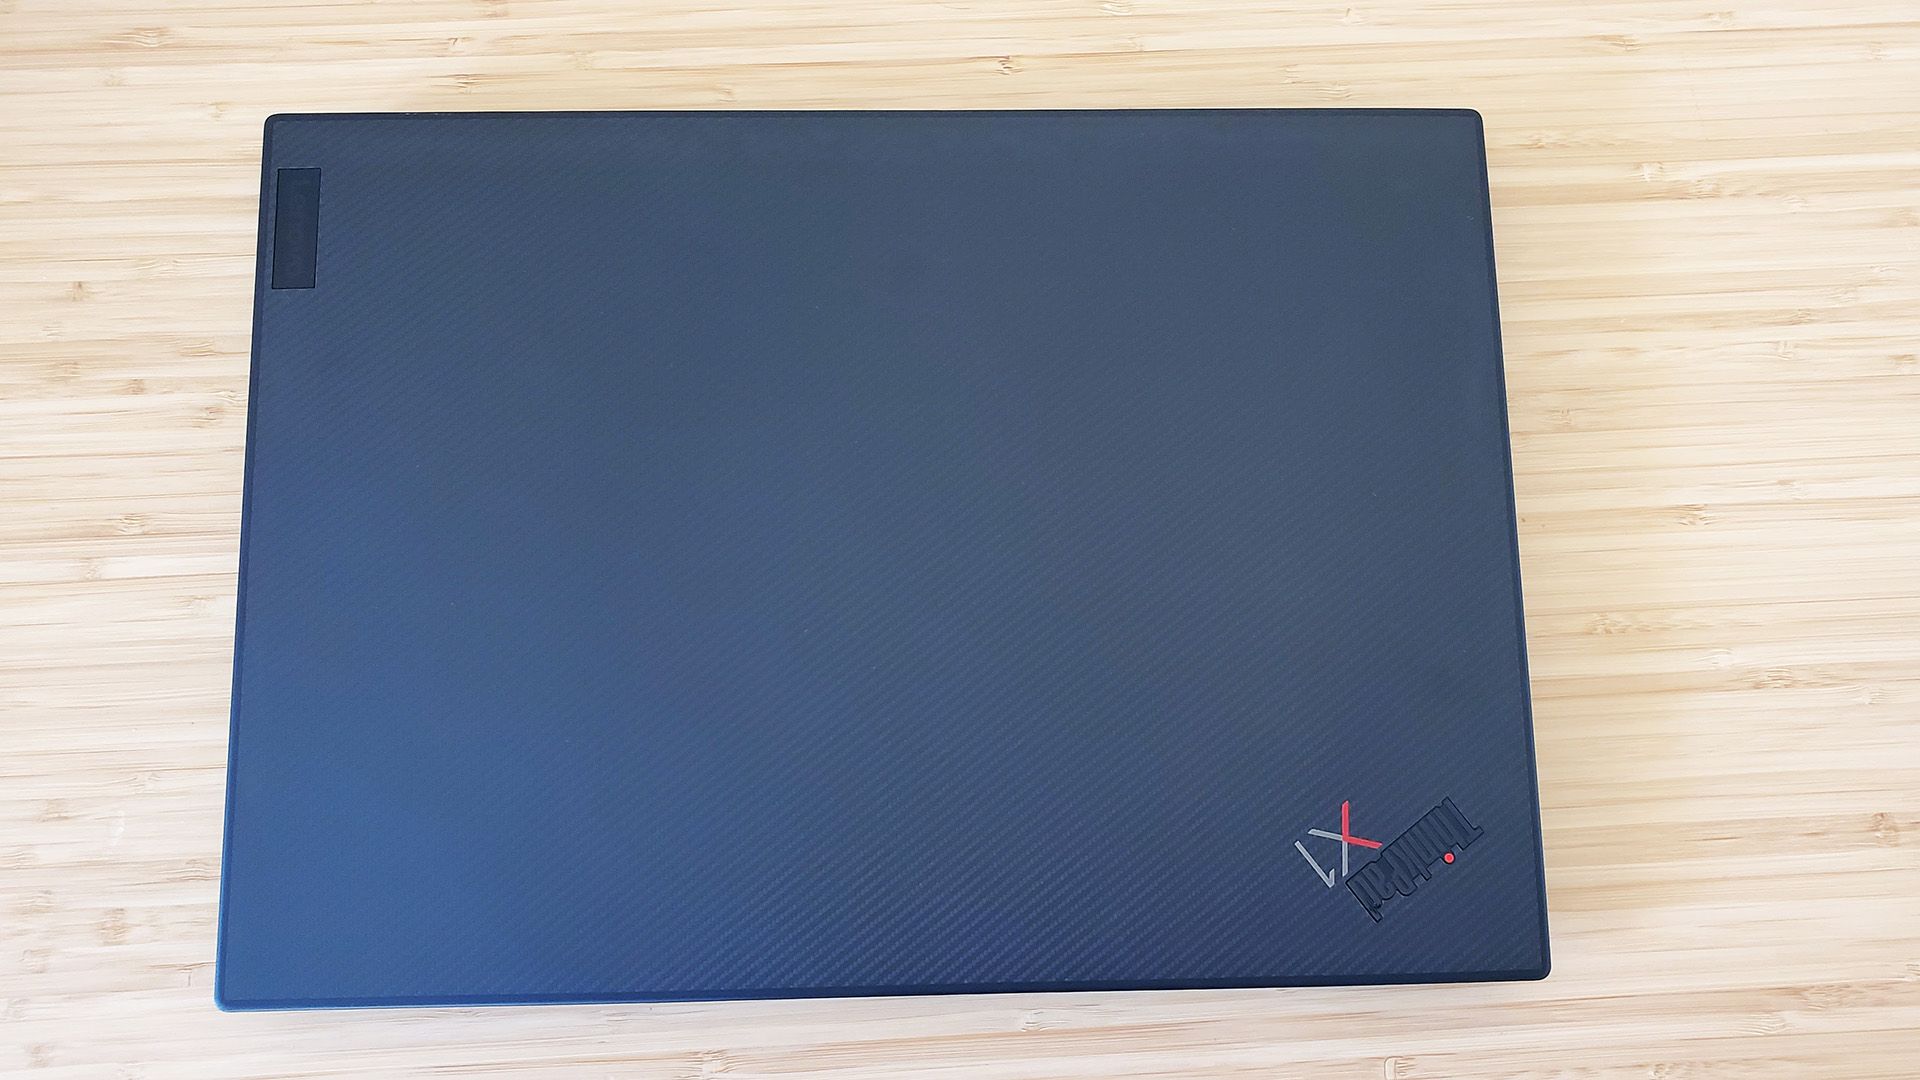 O laptop Lenovo ThinkPad X1 Extreme Gen 5 fechado sobre uma mesa.